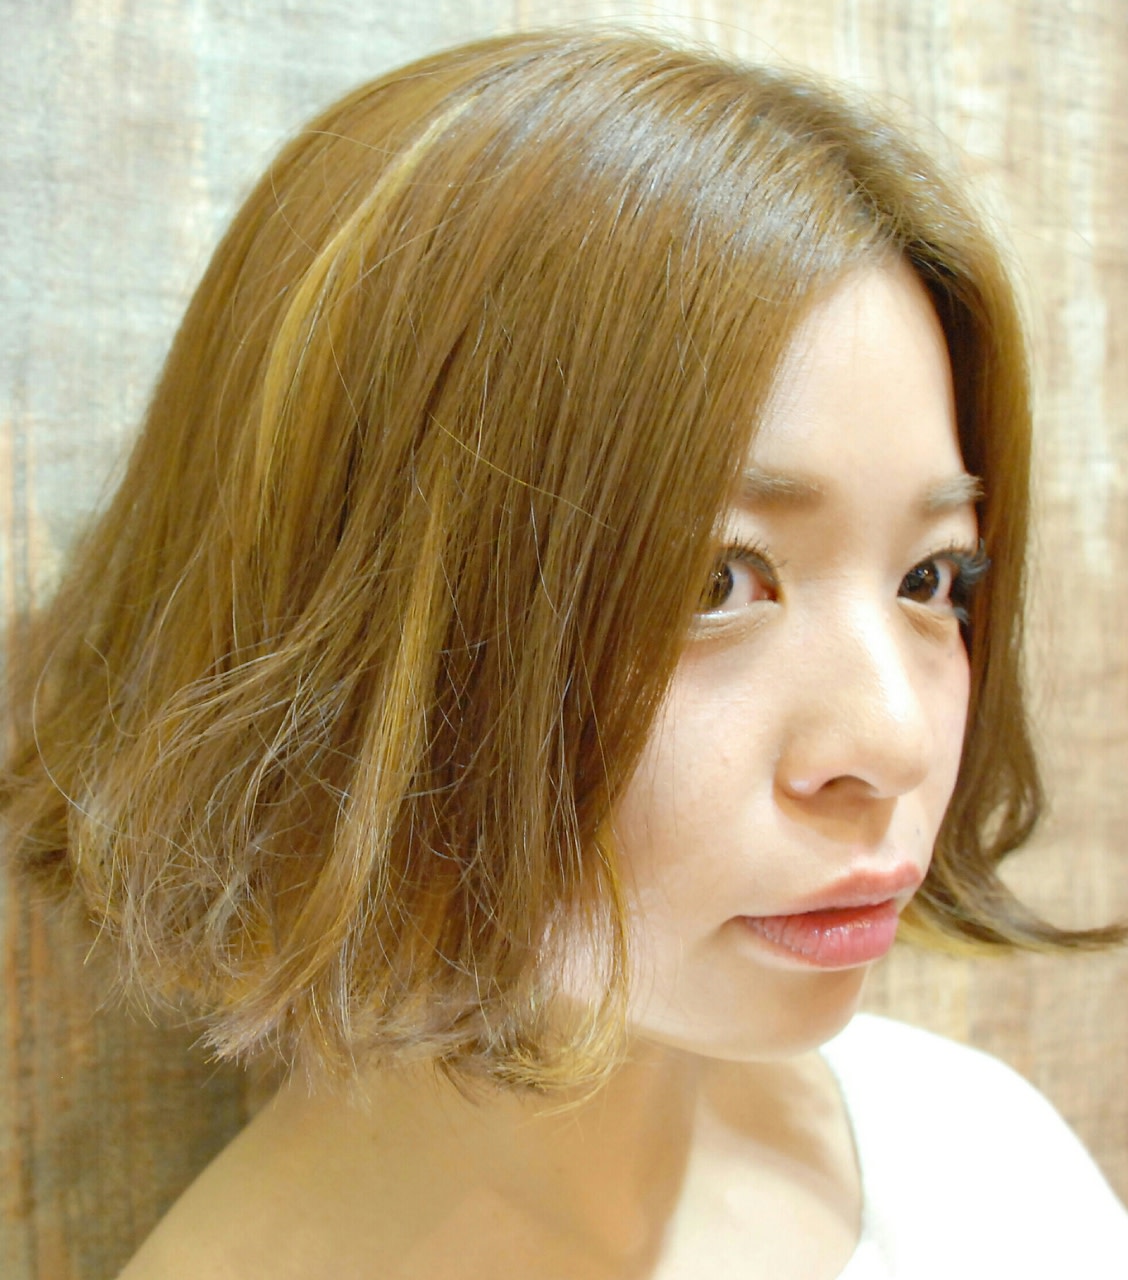 RISE HAIR BRAND【ライズヘアブランド】のスタイル紹介。モテカジュカラー